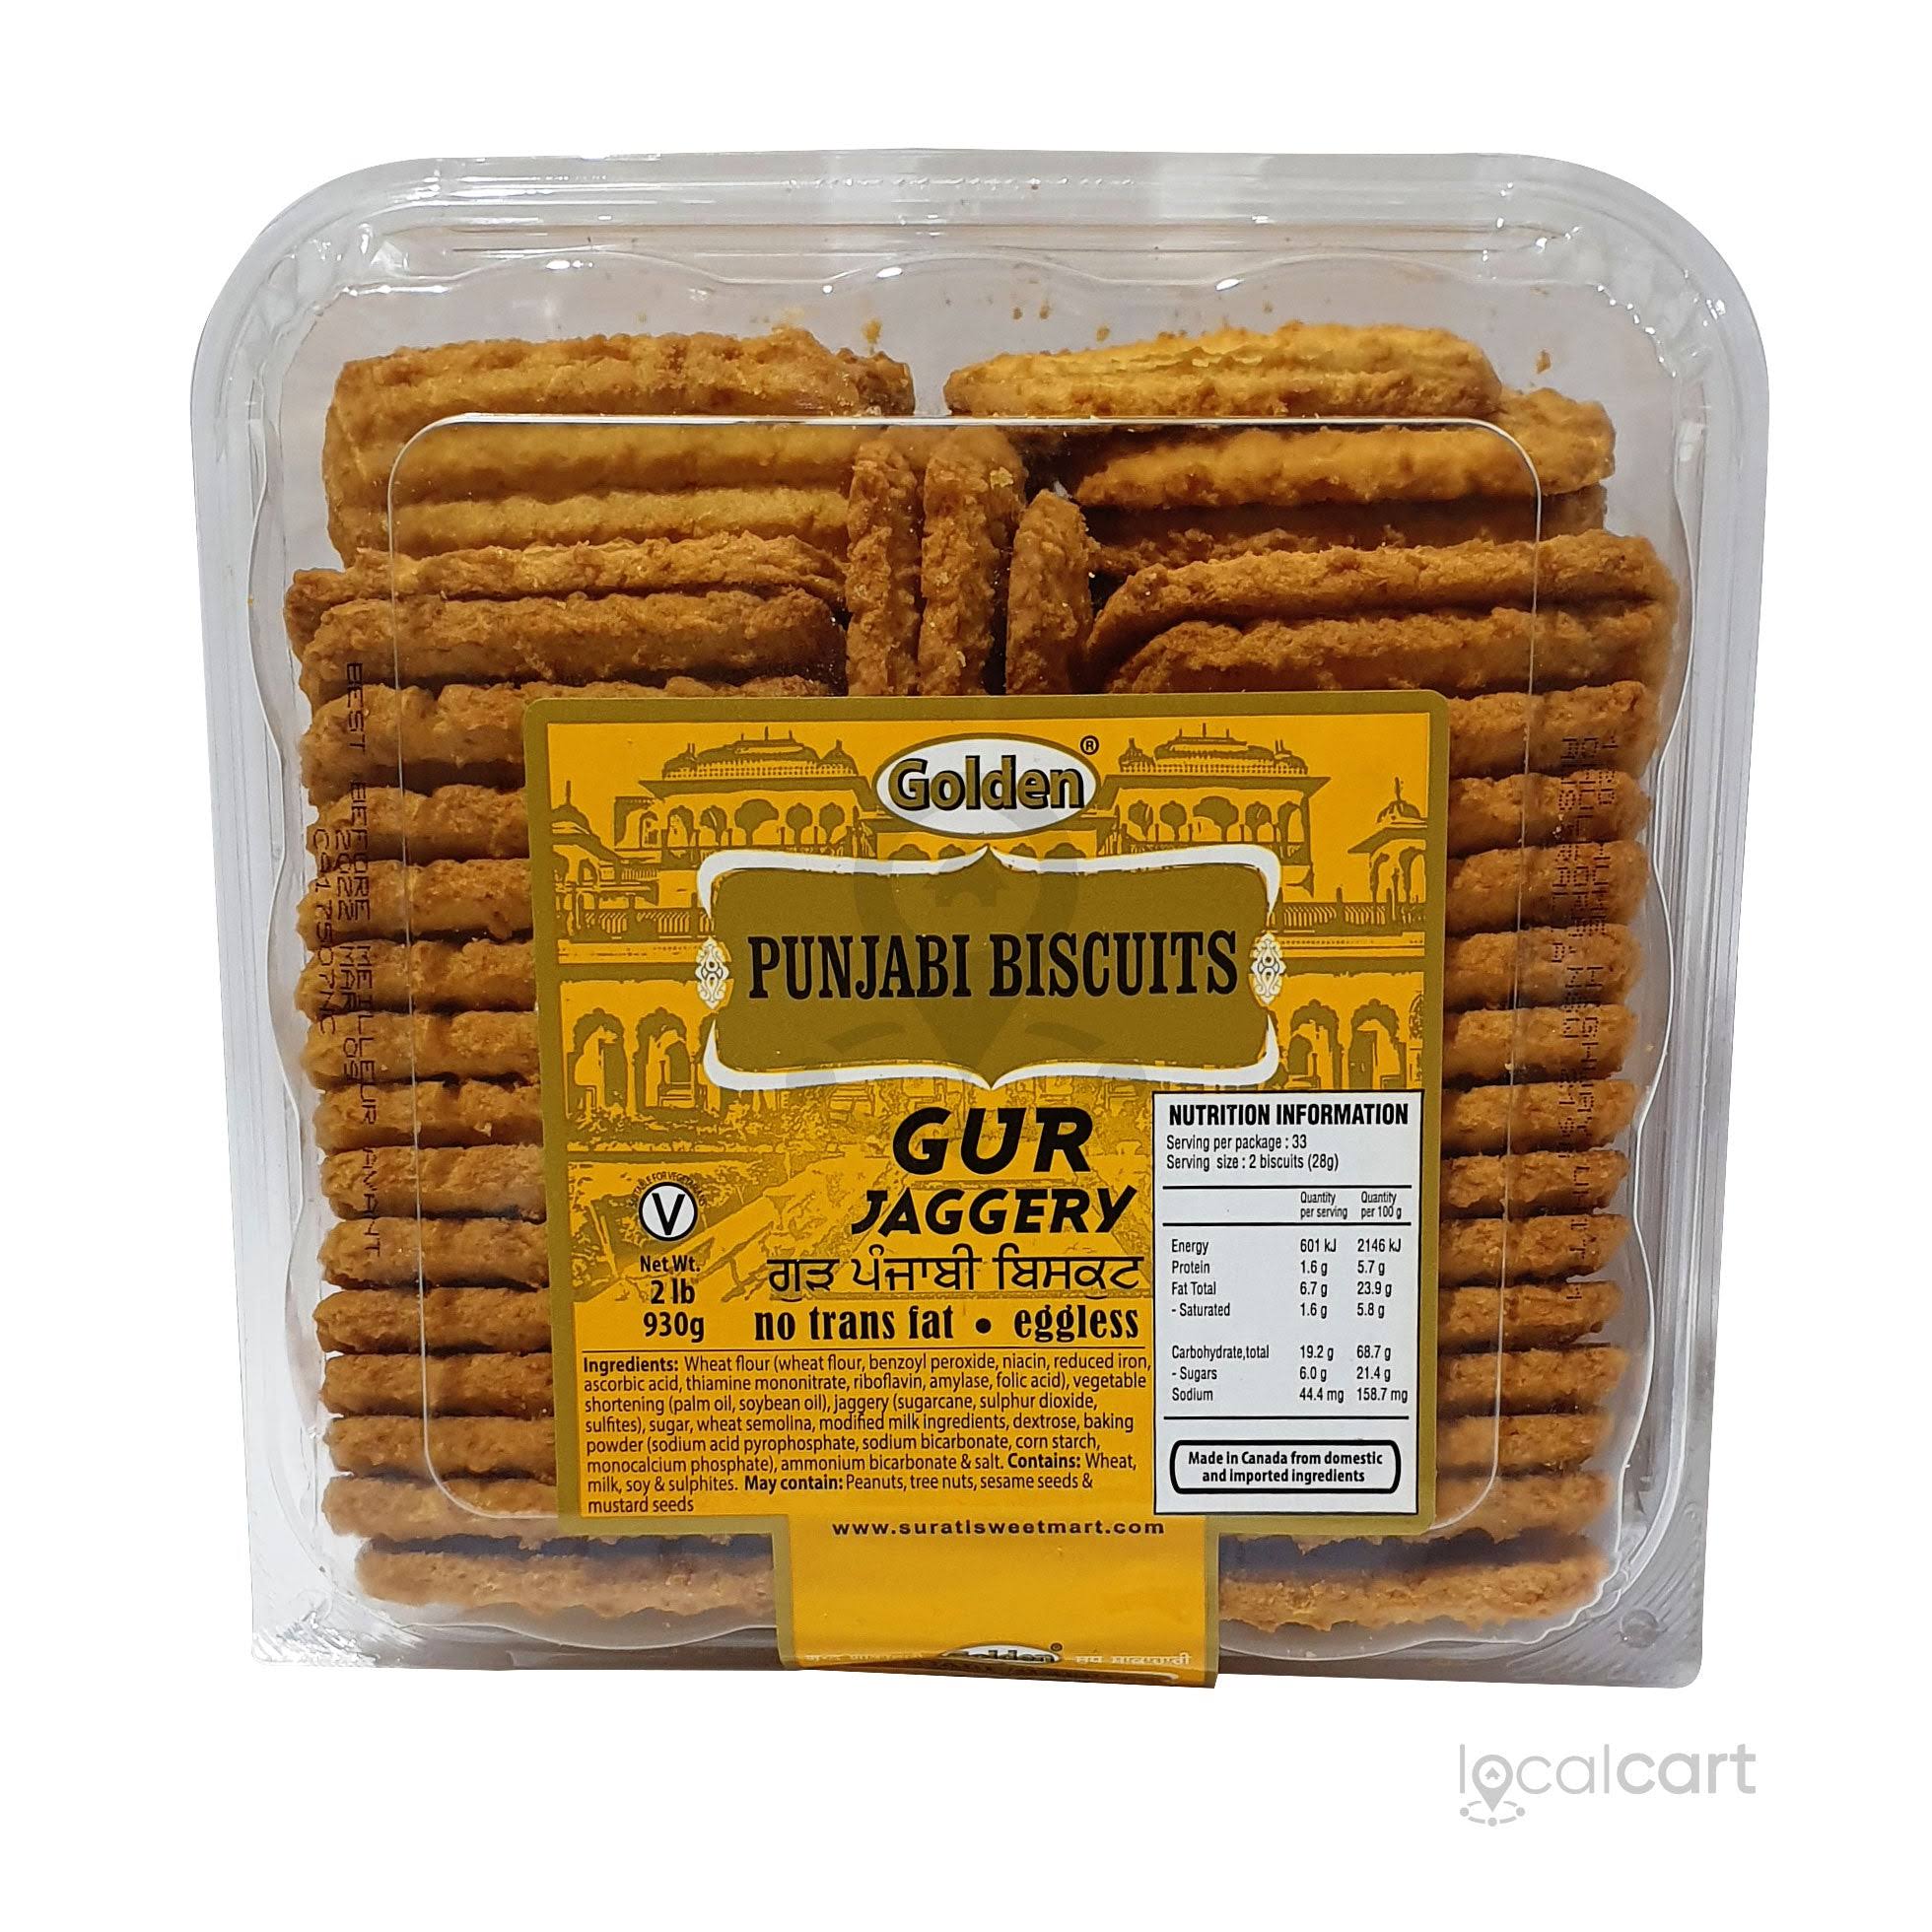 Golden Star Gur Jaggery Punjabi Cookies Biscuits